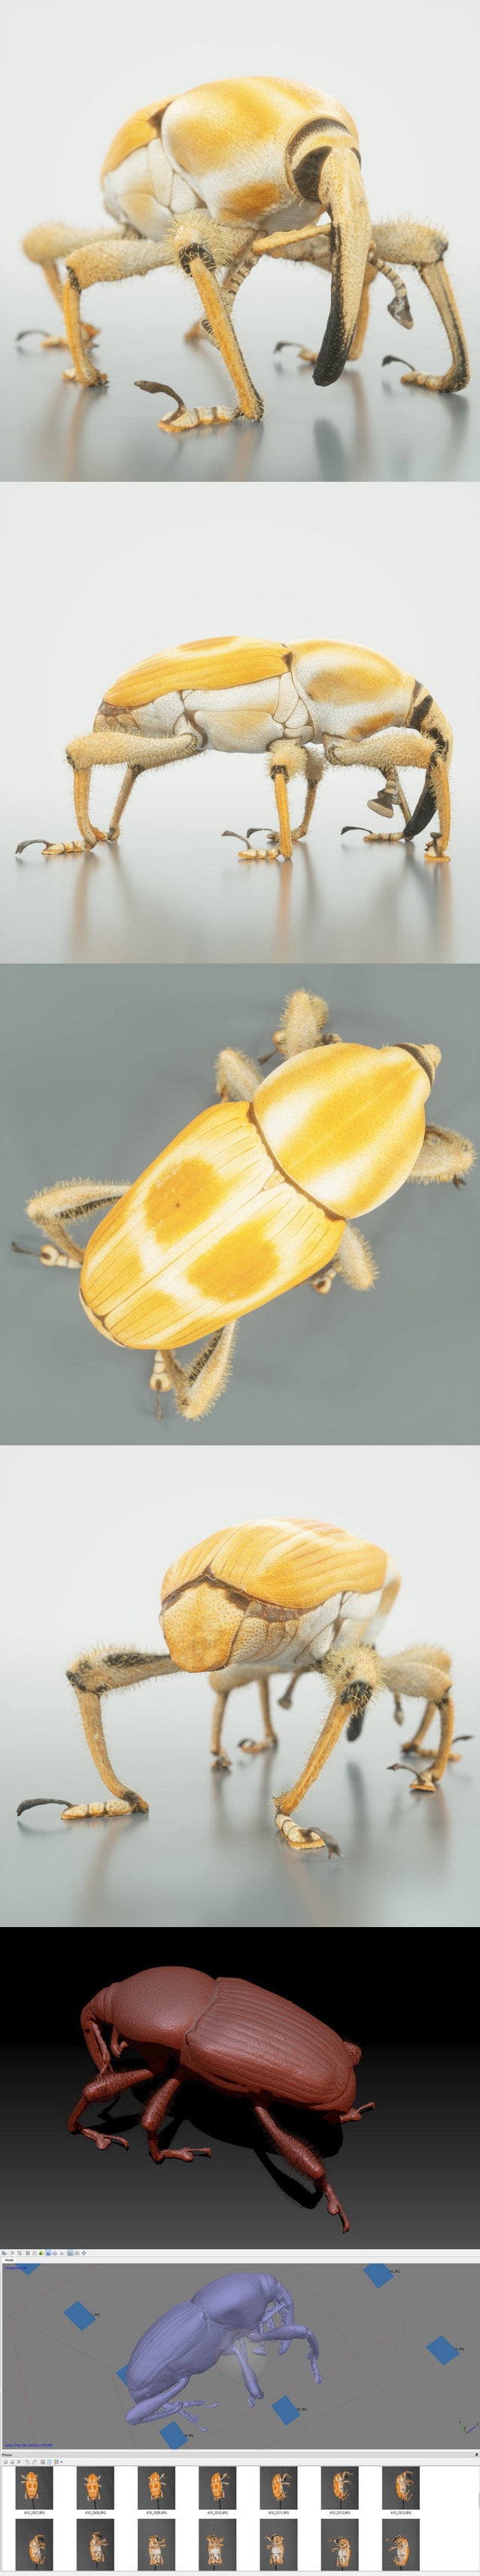 Poteriophorus Monilifasciatus